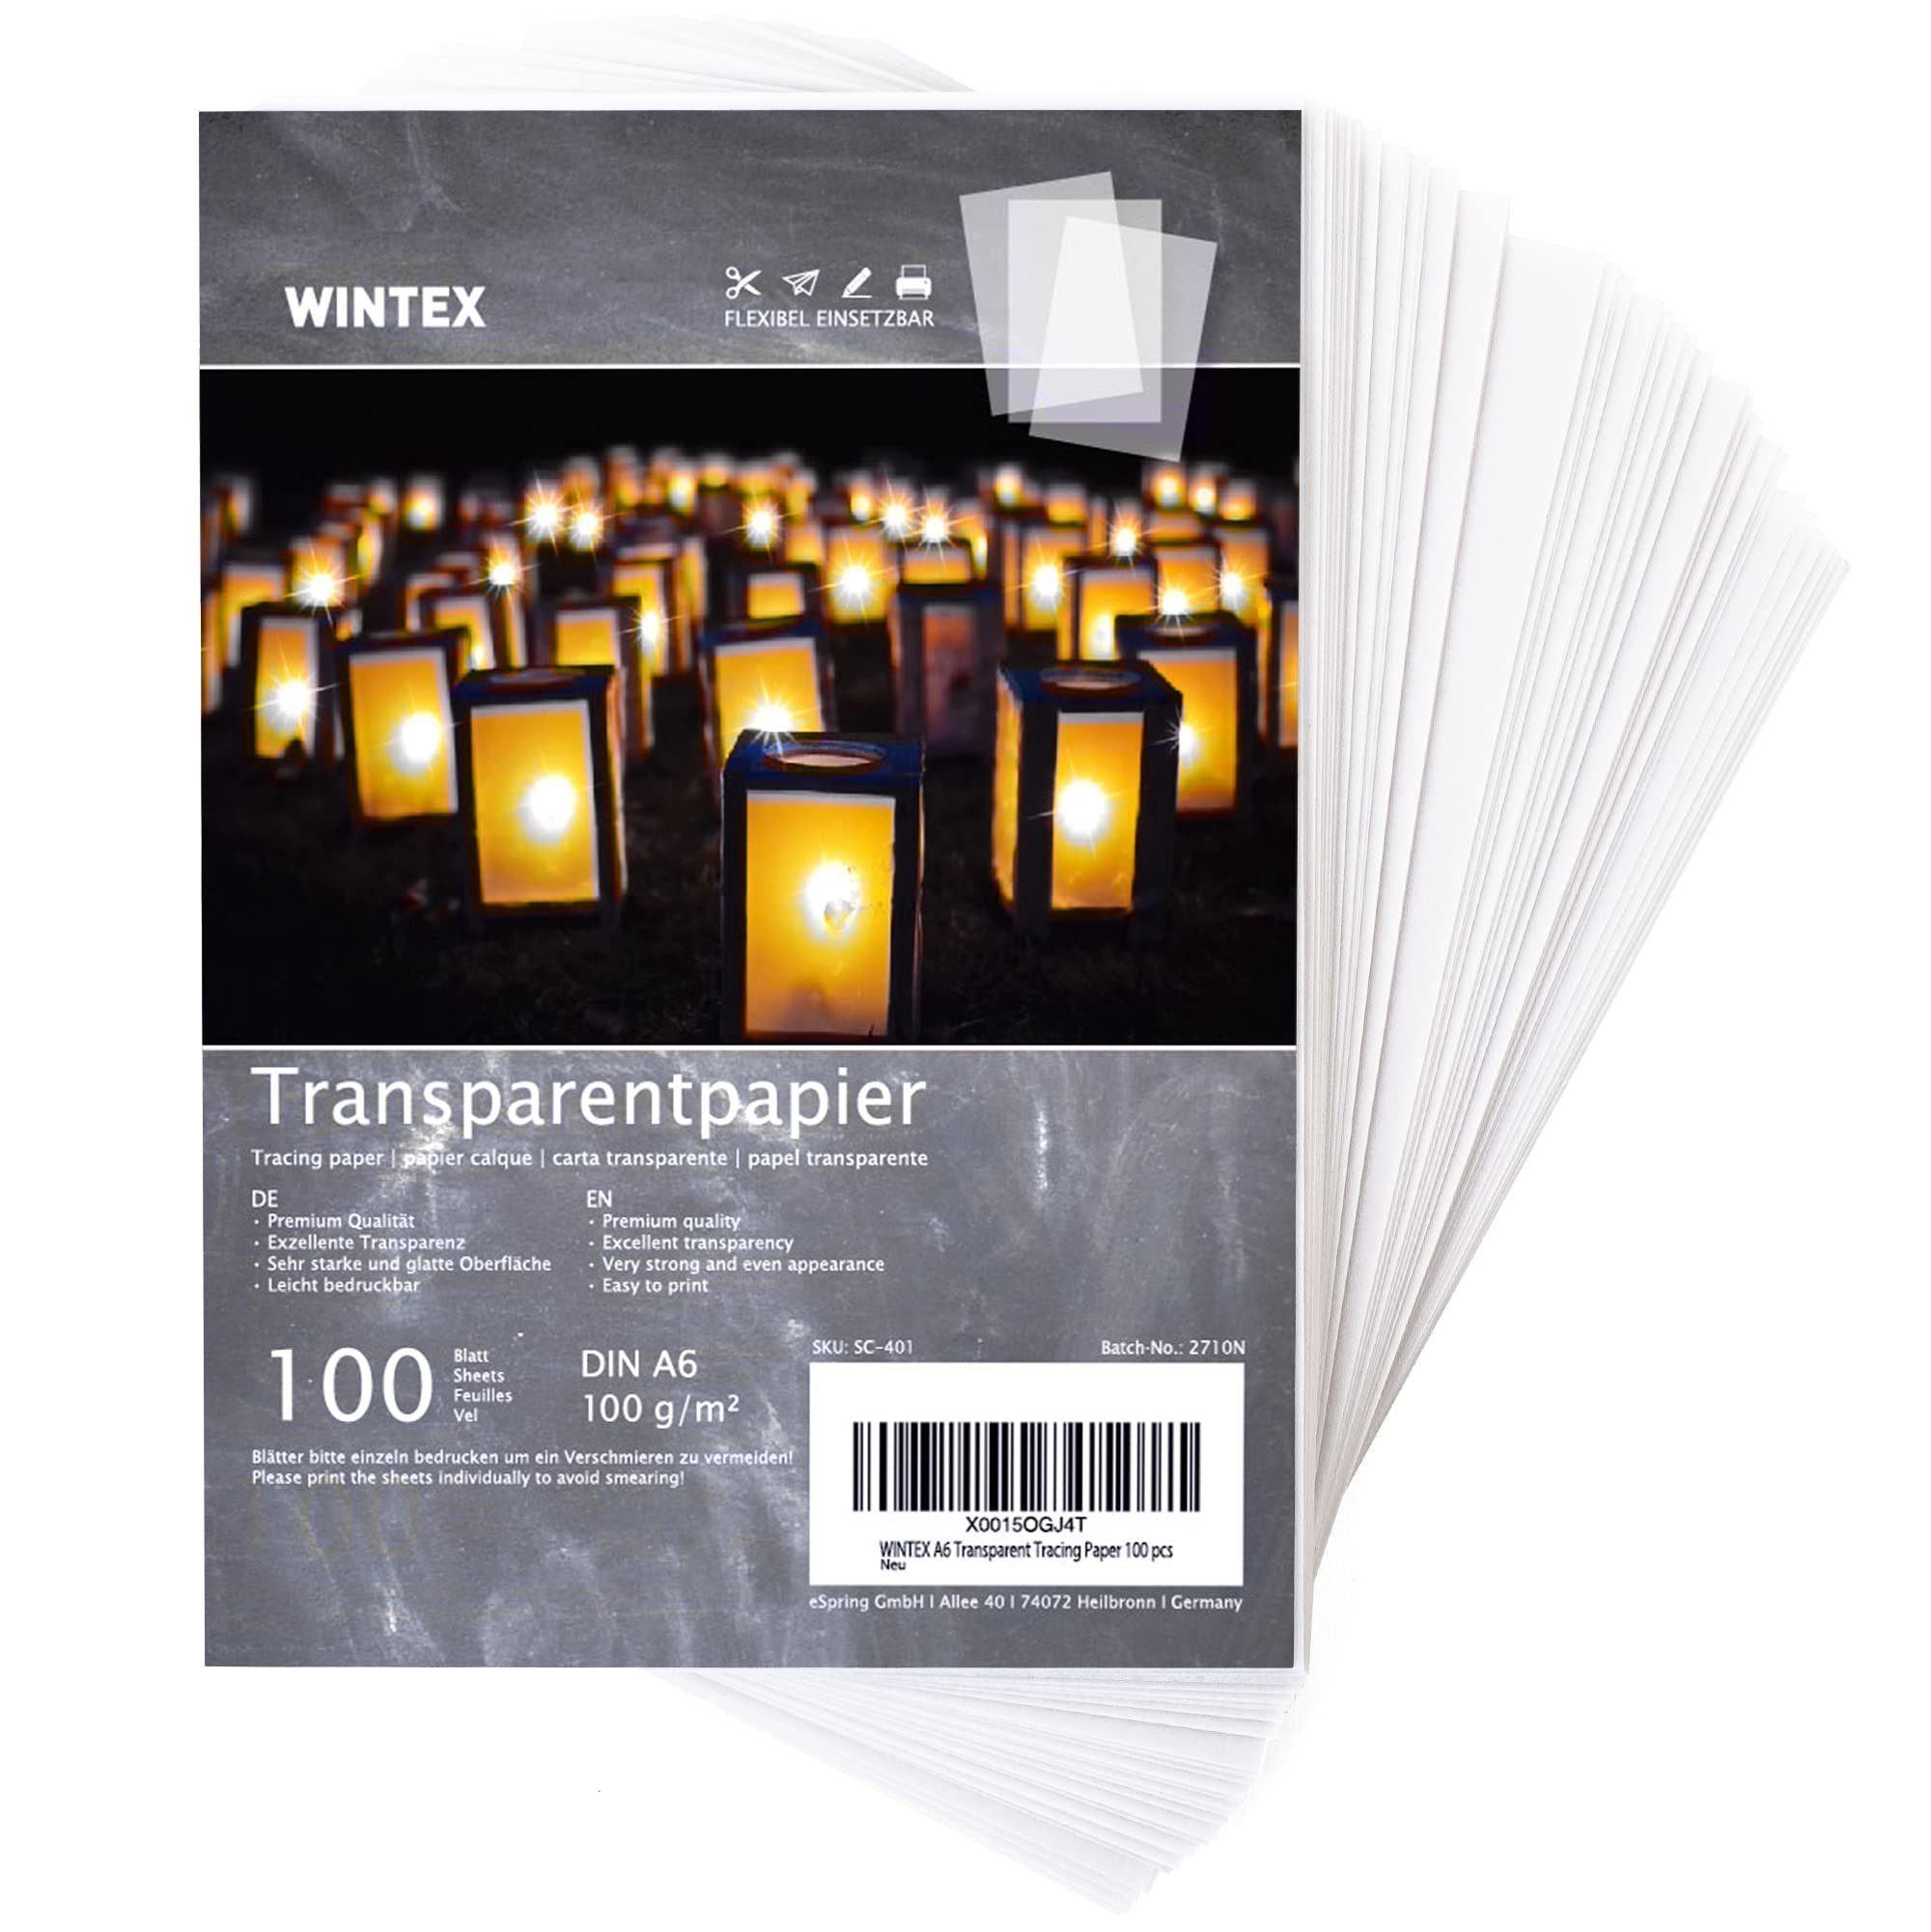 WINTEX Transparentpapier 100 Blatt Transparentpapier DIN A6, weiß, 102 g/qm, 100 Blatt Transparentpapier DIN A6, weiß